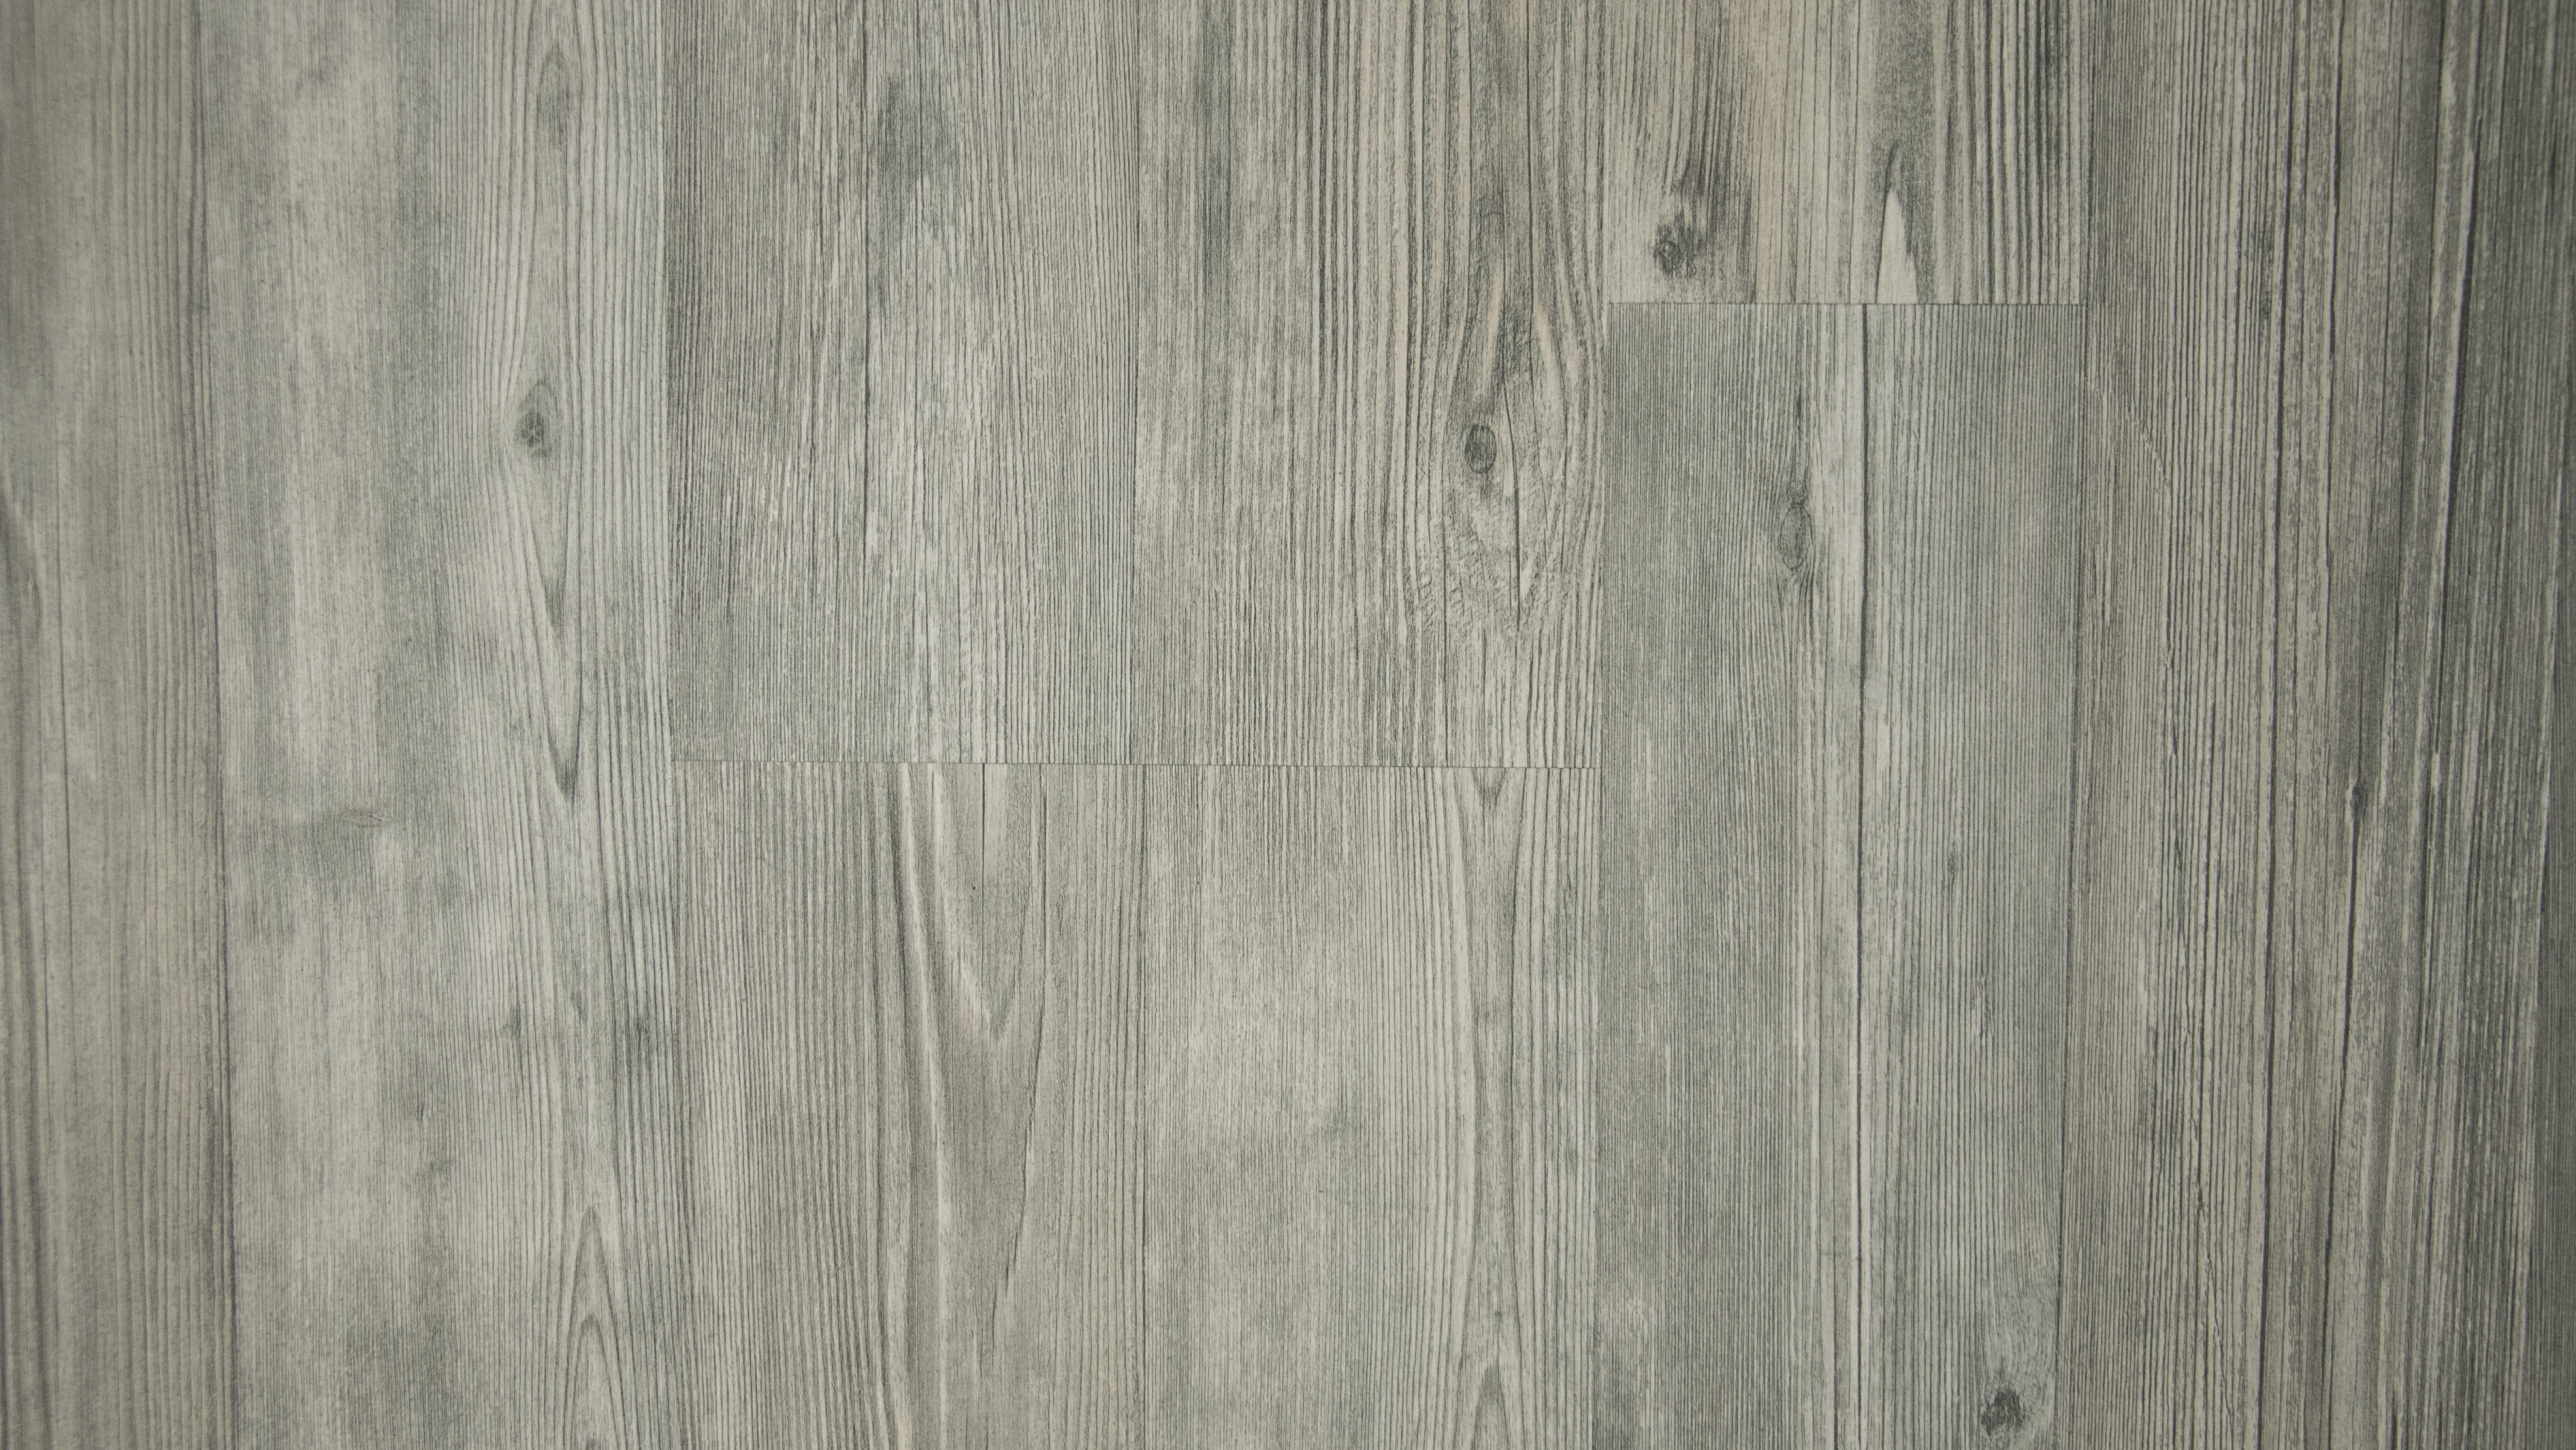 Free photo: wood texture laminate flooring - Wood texture - Free